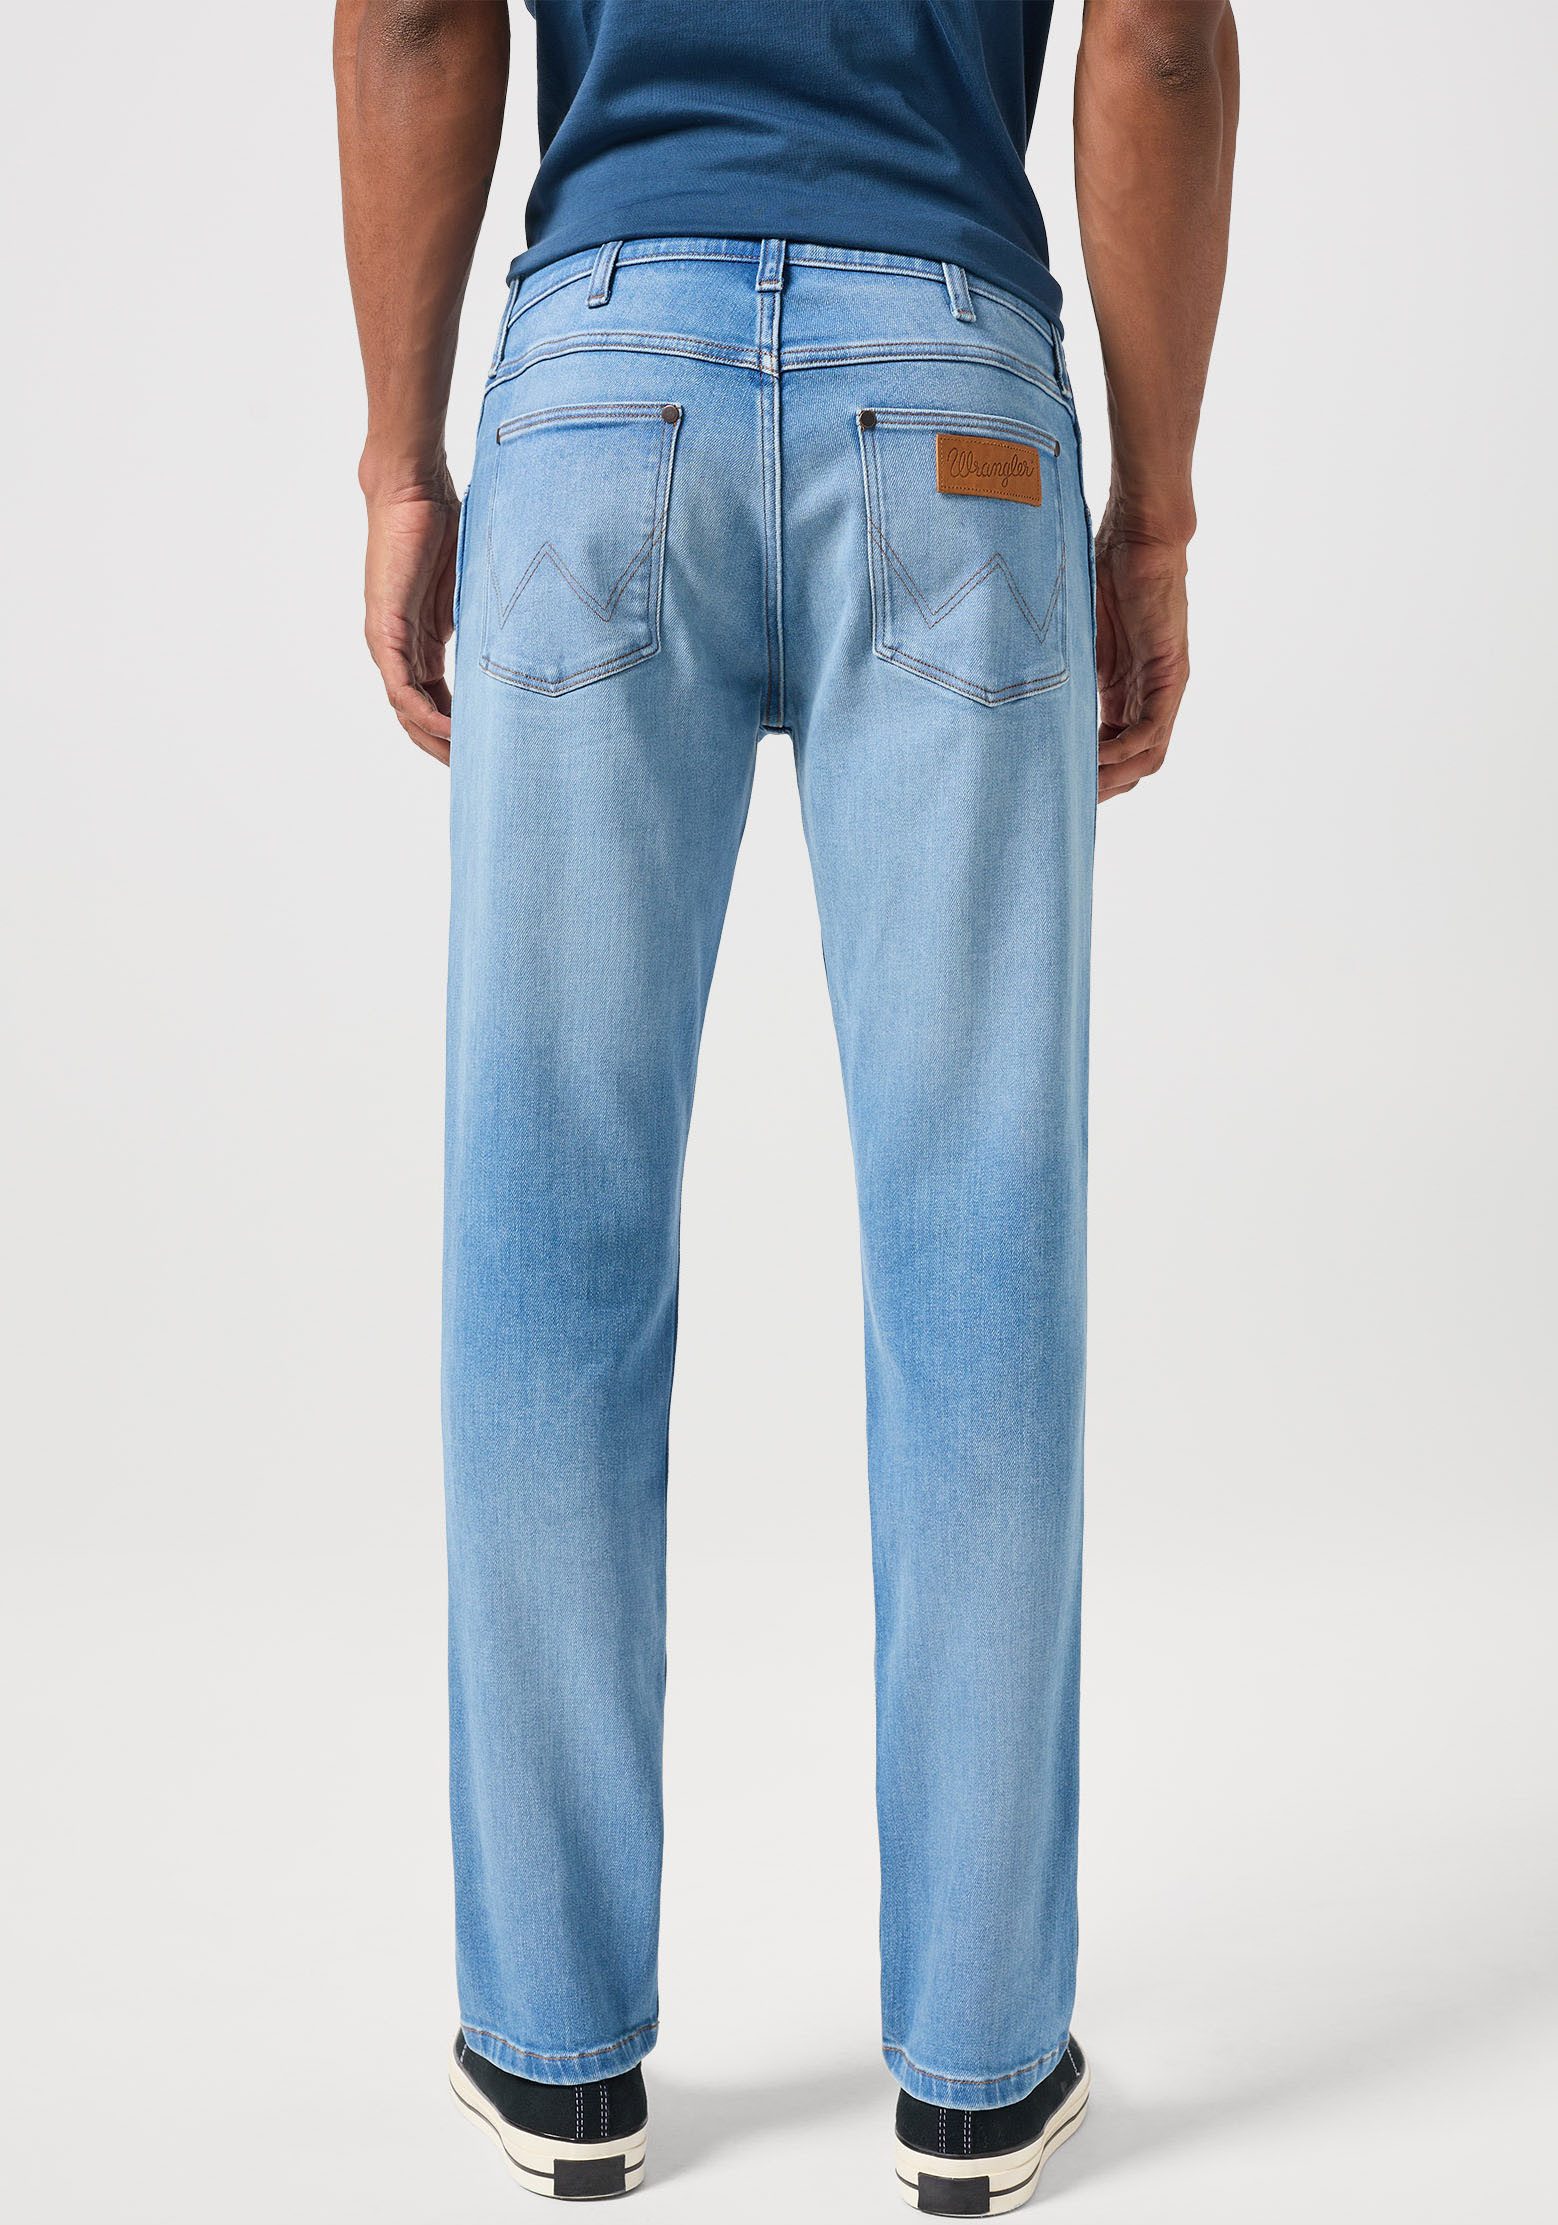 Wrangler 5-pocket jeans GREENSBORO FREE TO STRETCH